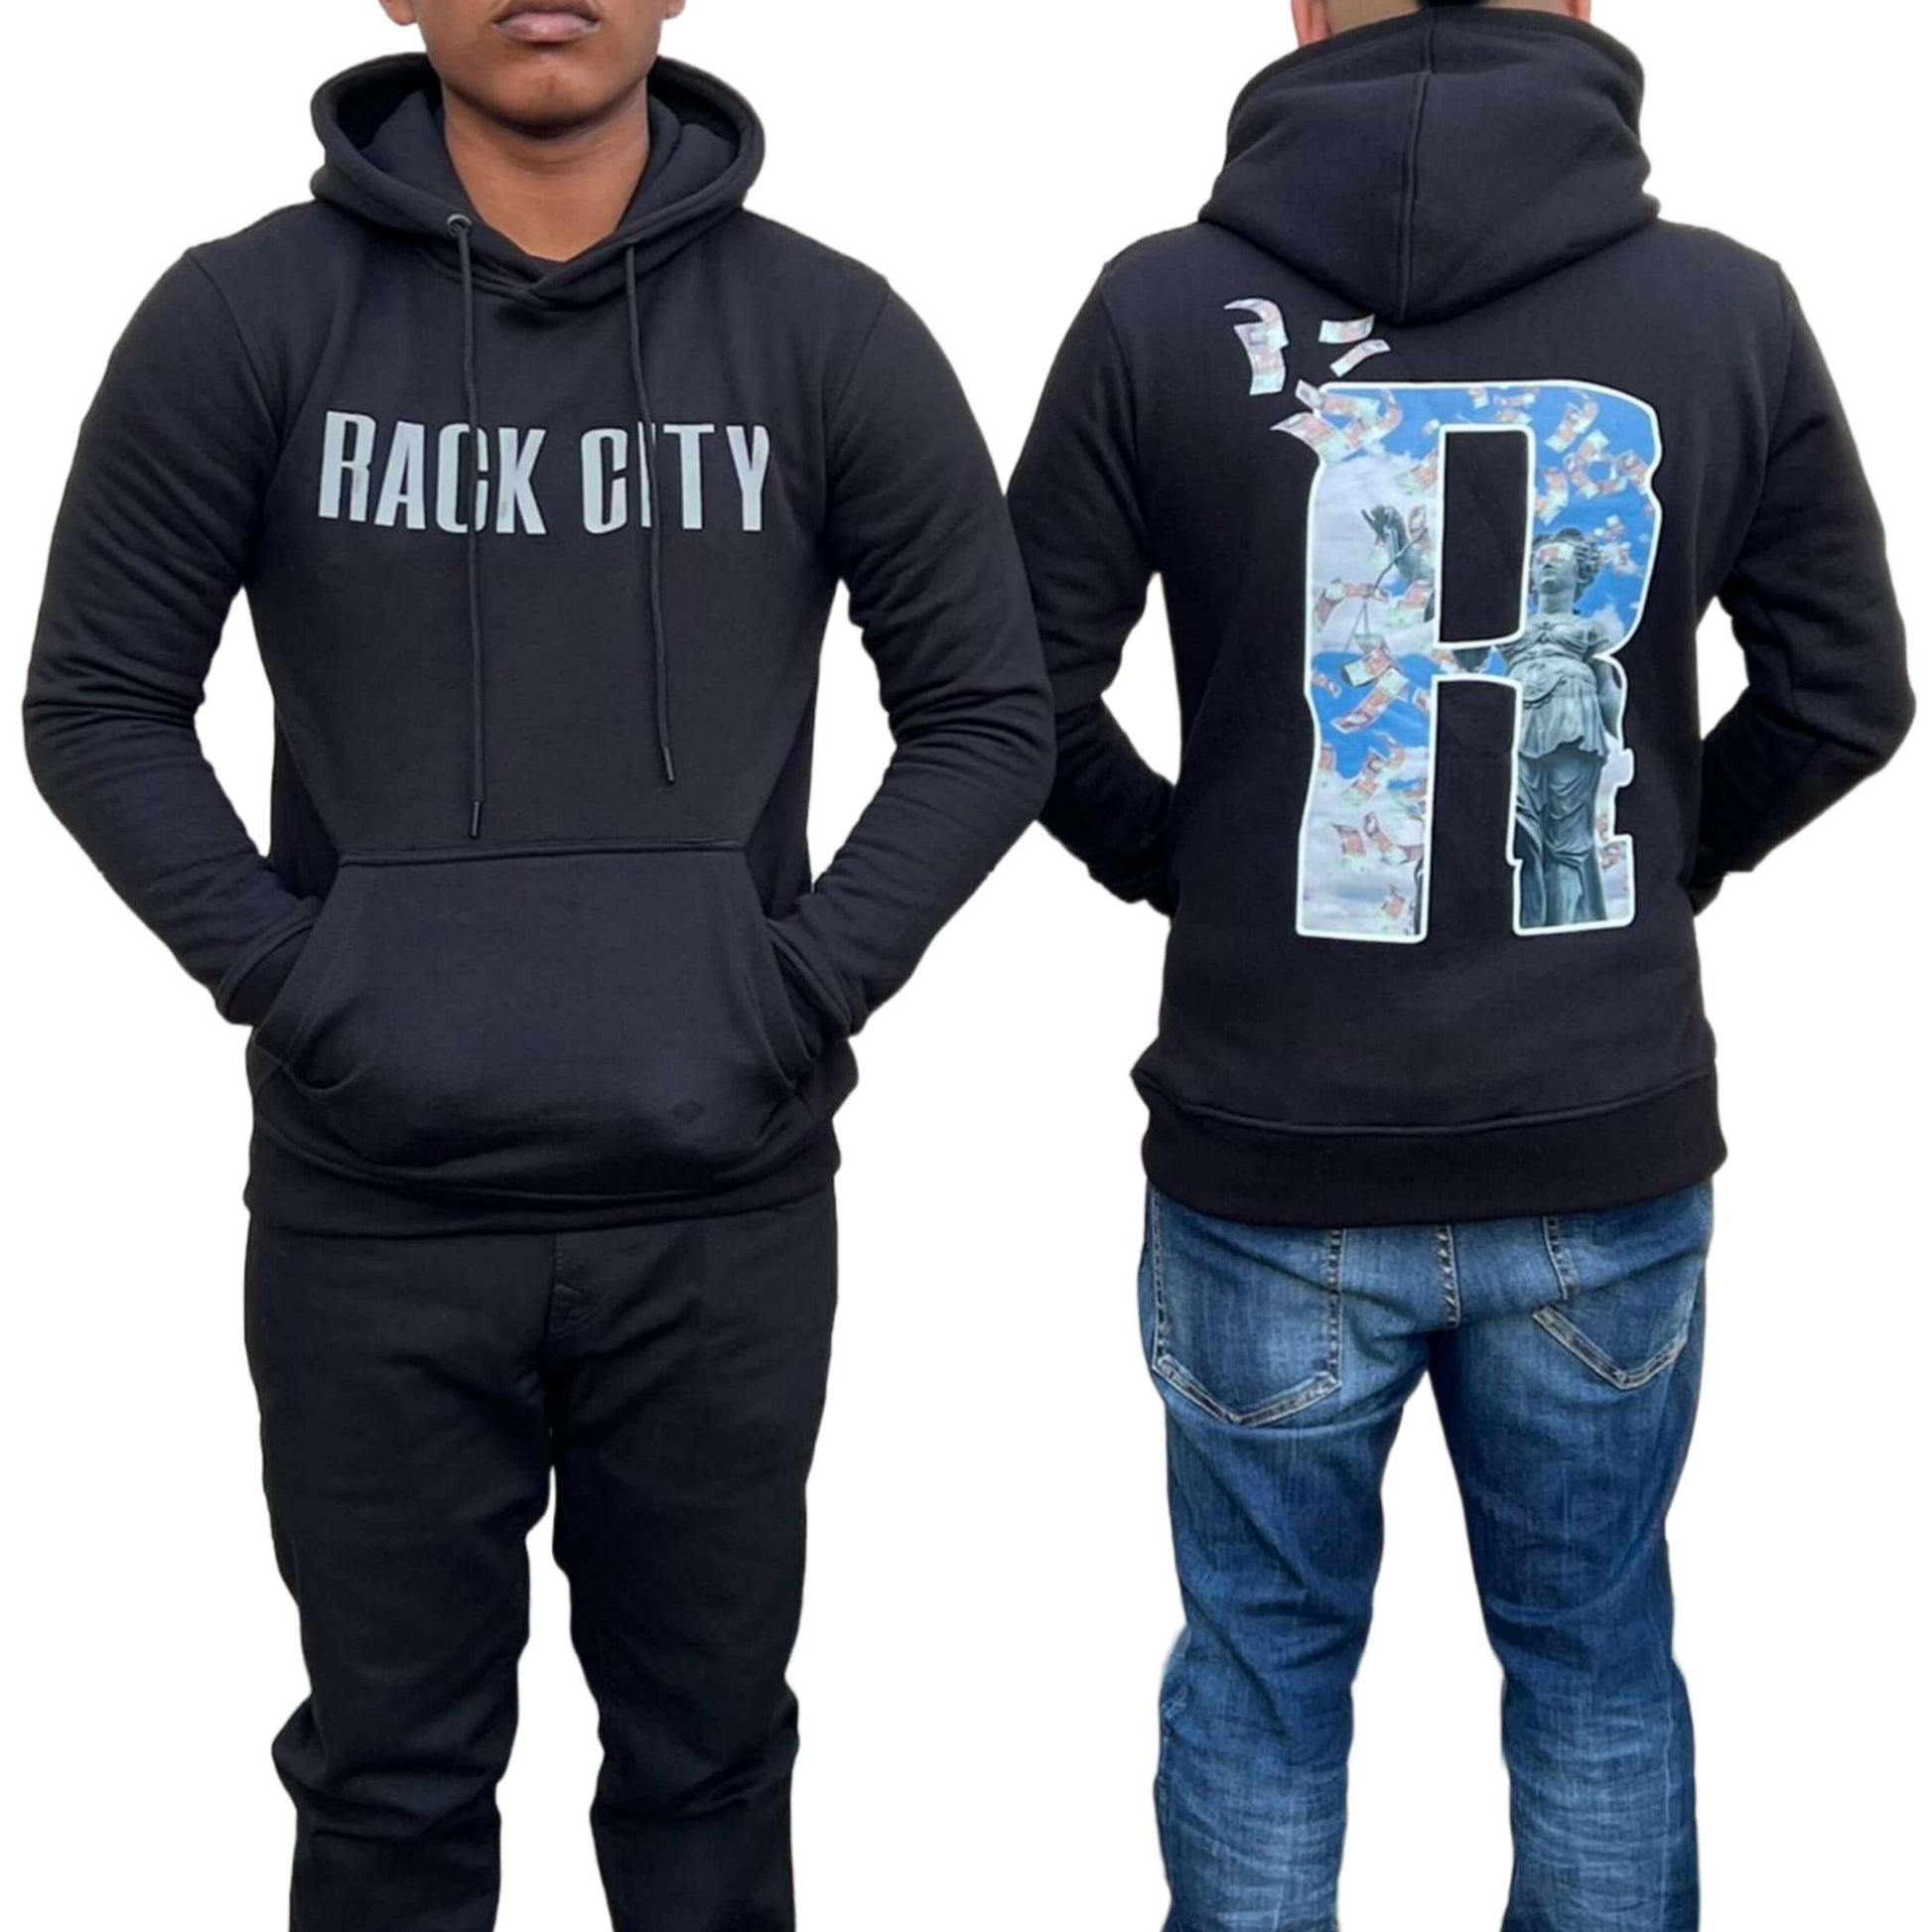 Rack City Reflective Black Hoodie Jumper R Design